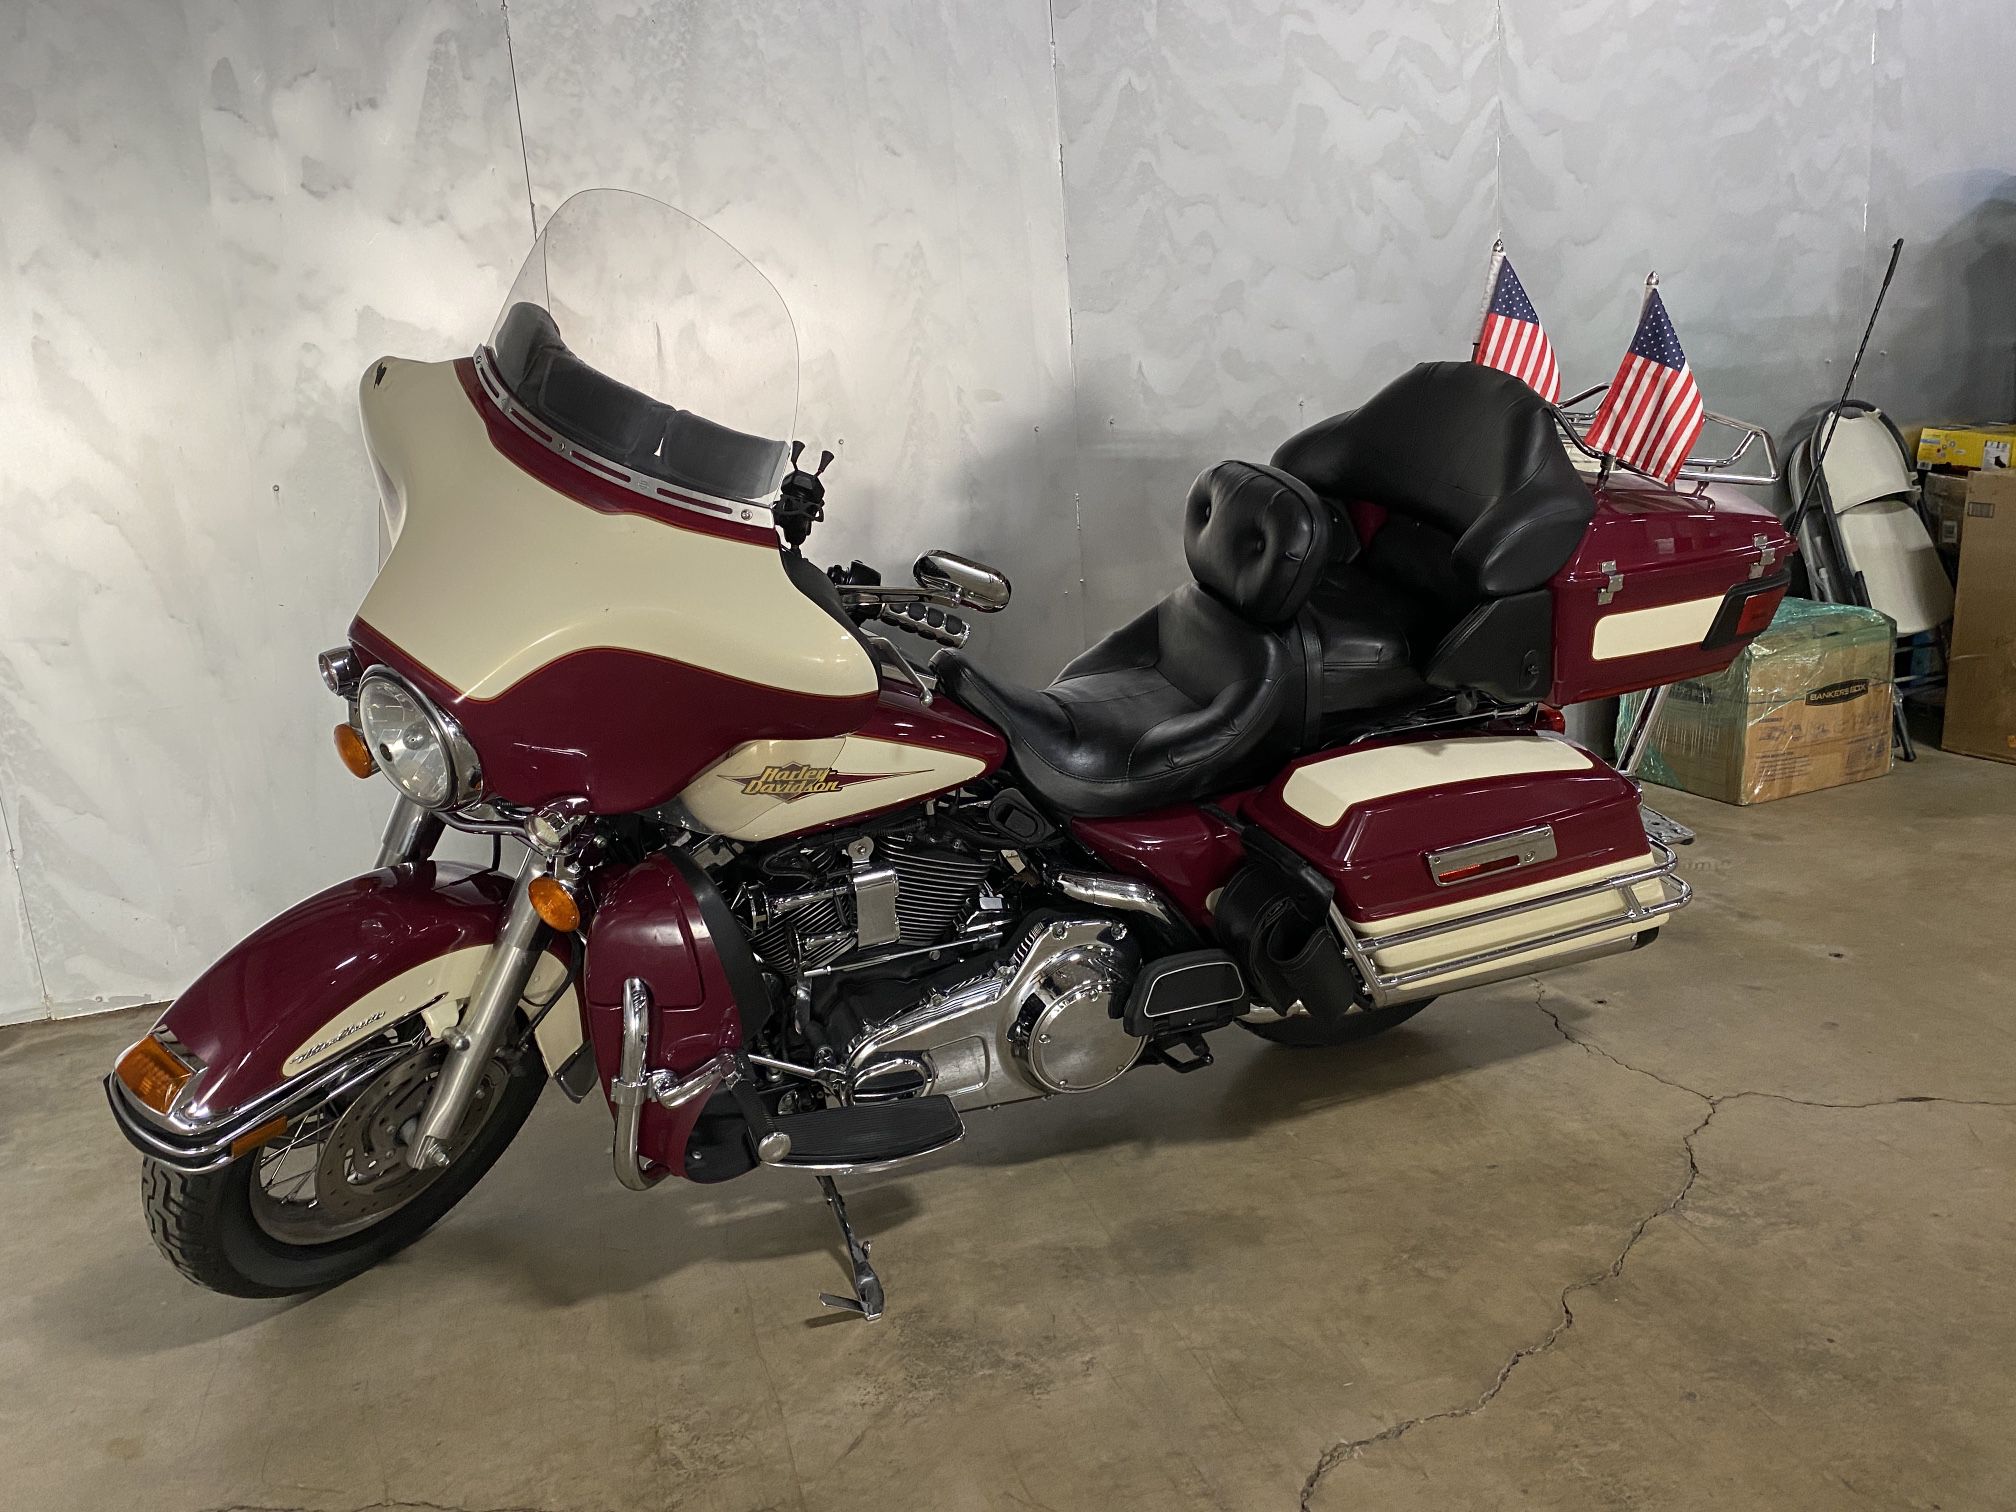 2007 Harley Davidson Touring For Sale -$6,000